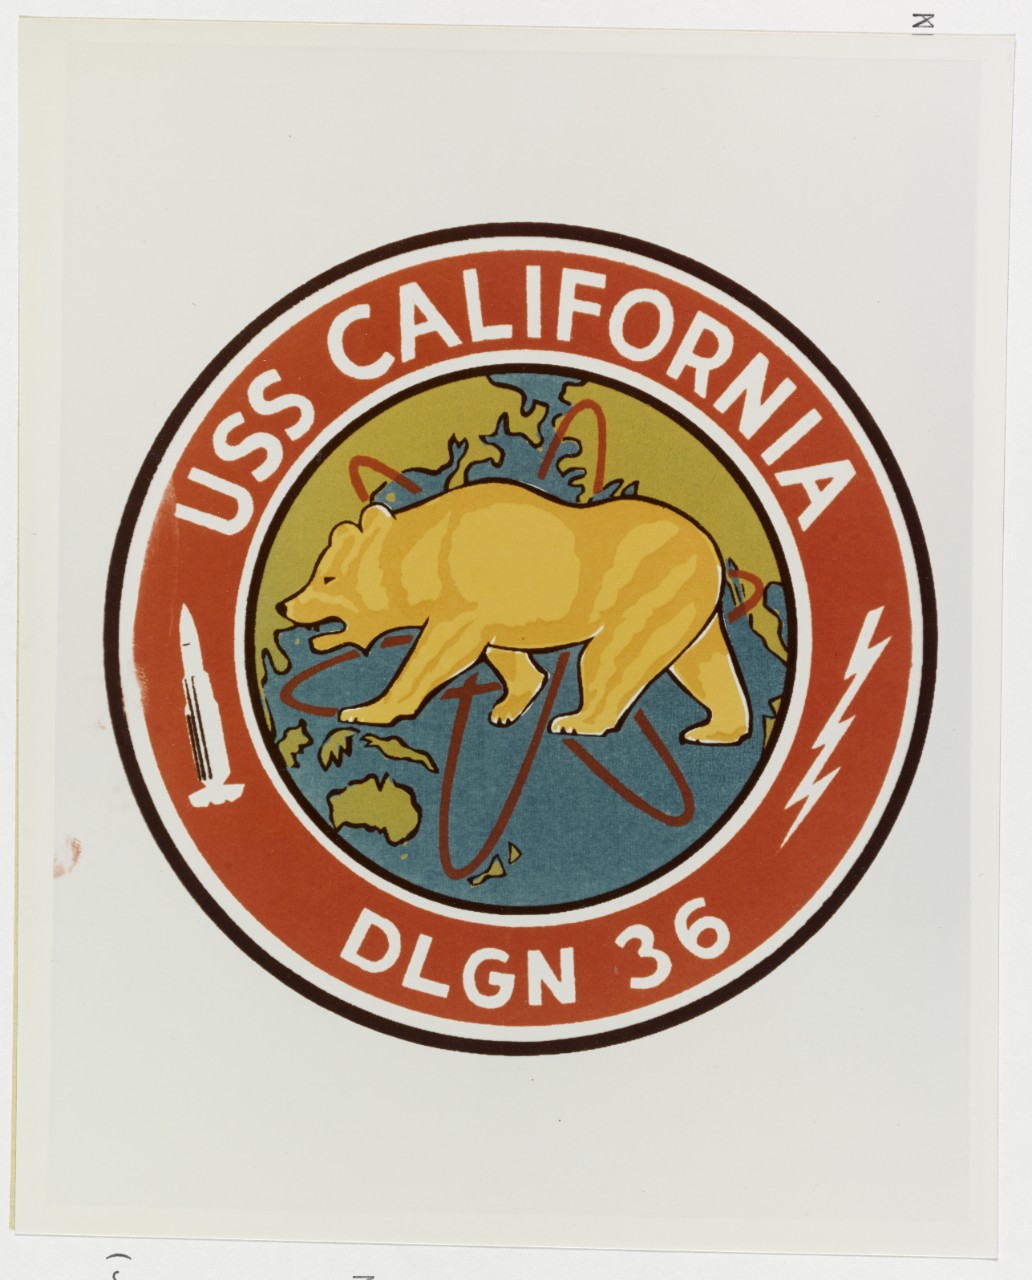 Insignia: USS CALIFORNIA (DLGN-36)